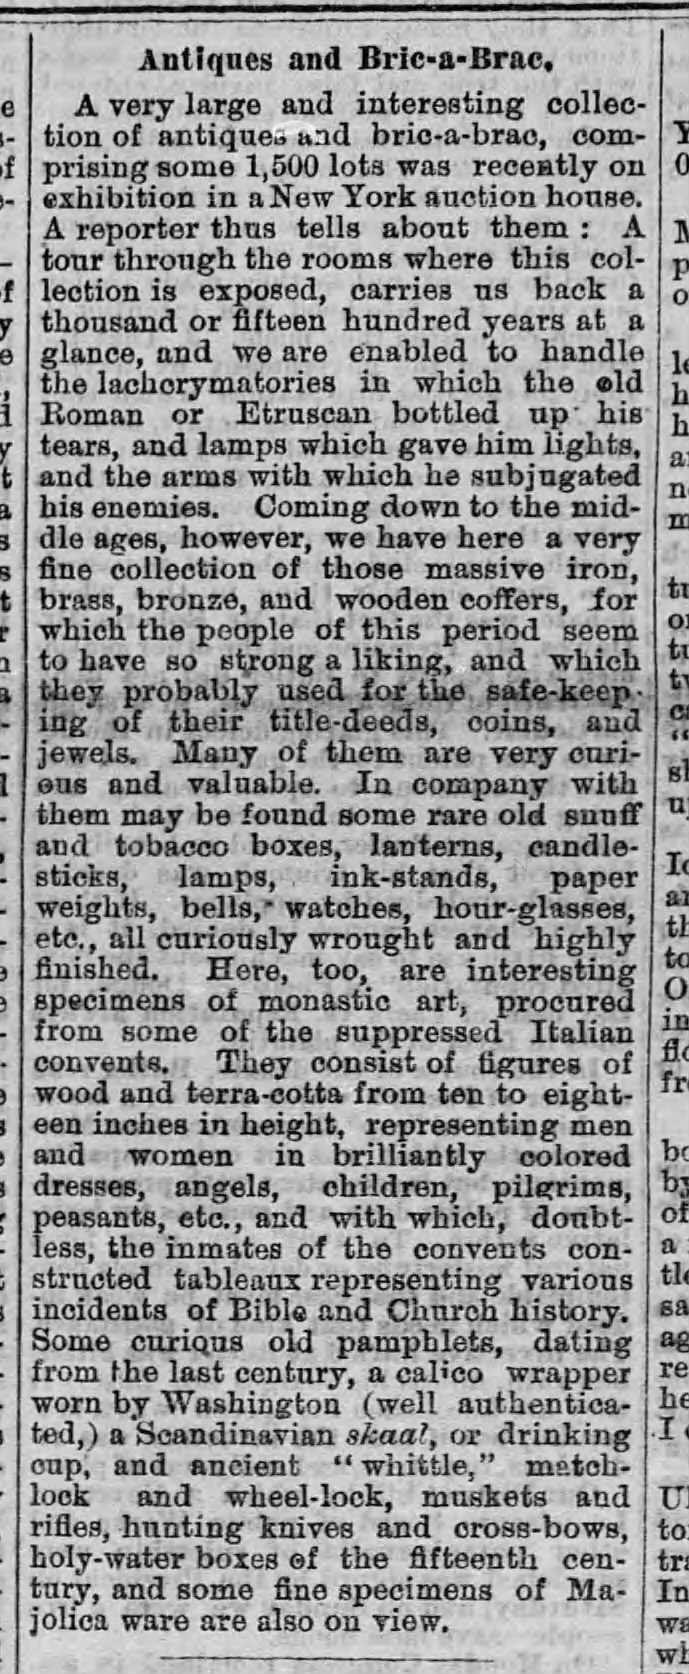 1874 description of historical bric-a-brac items